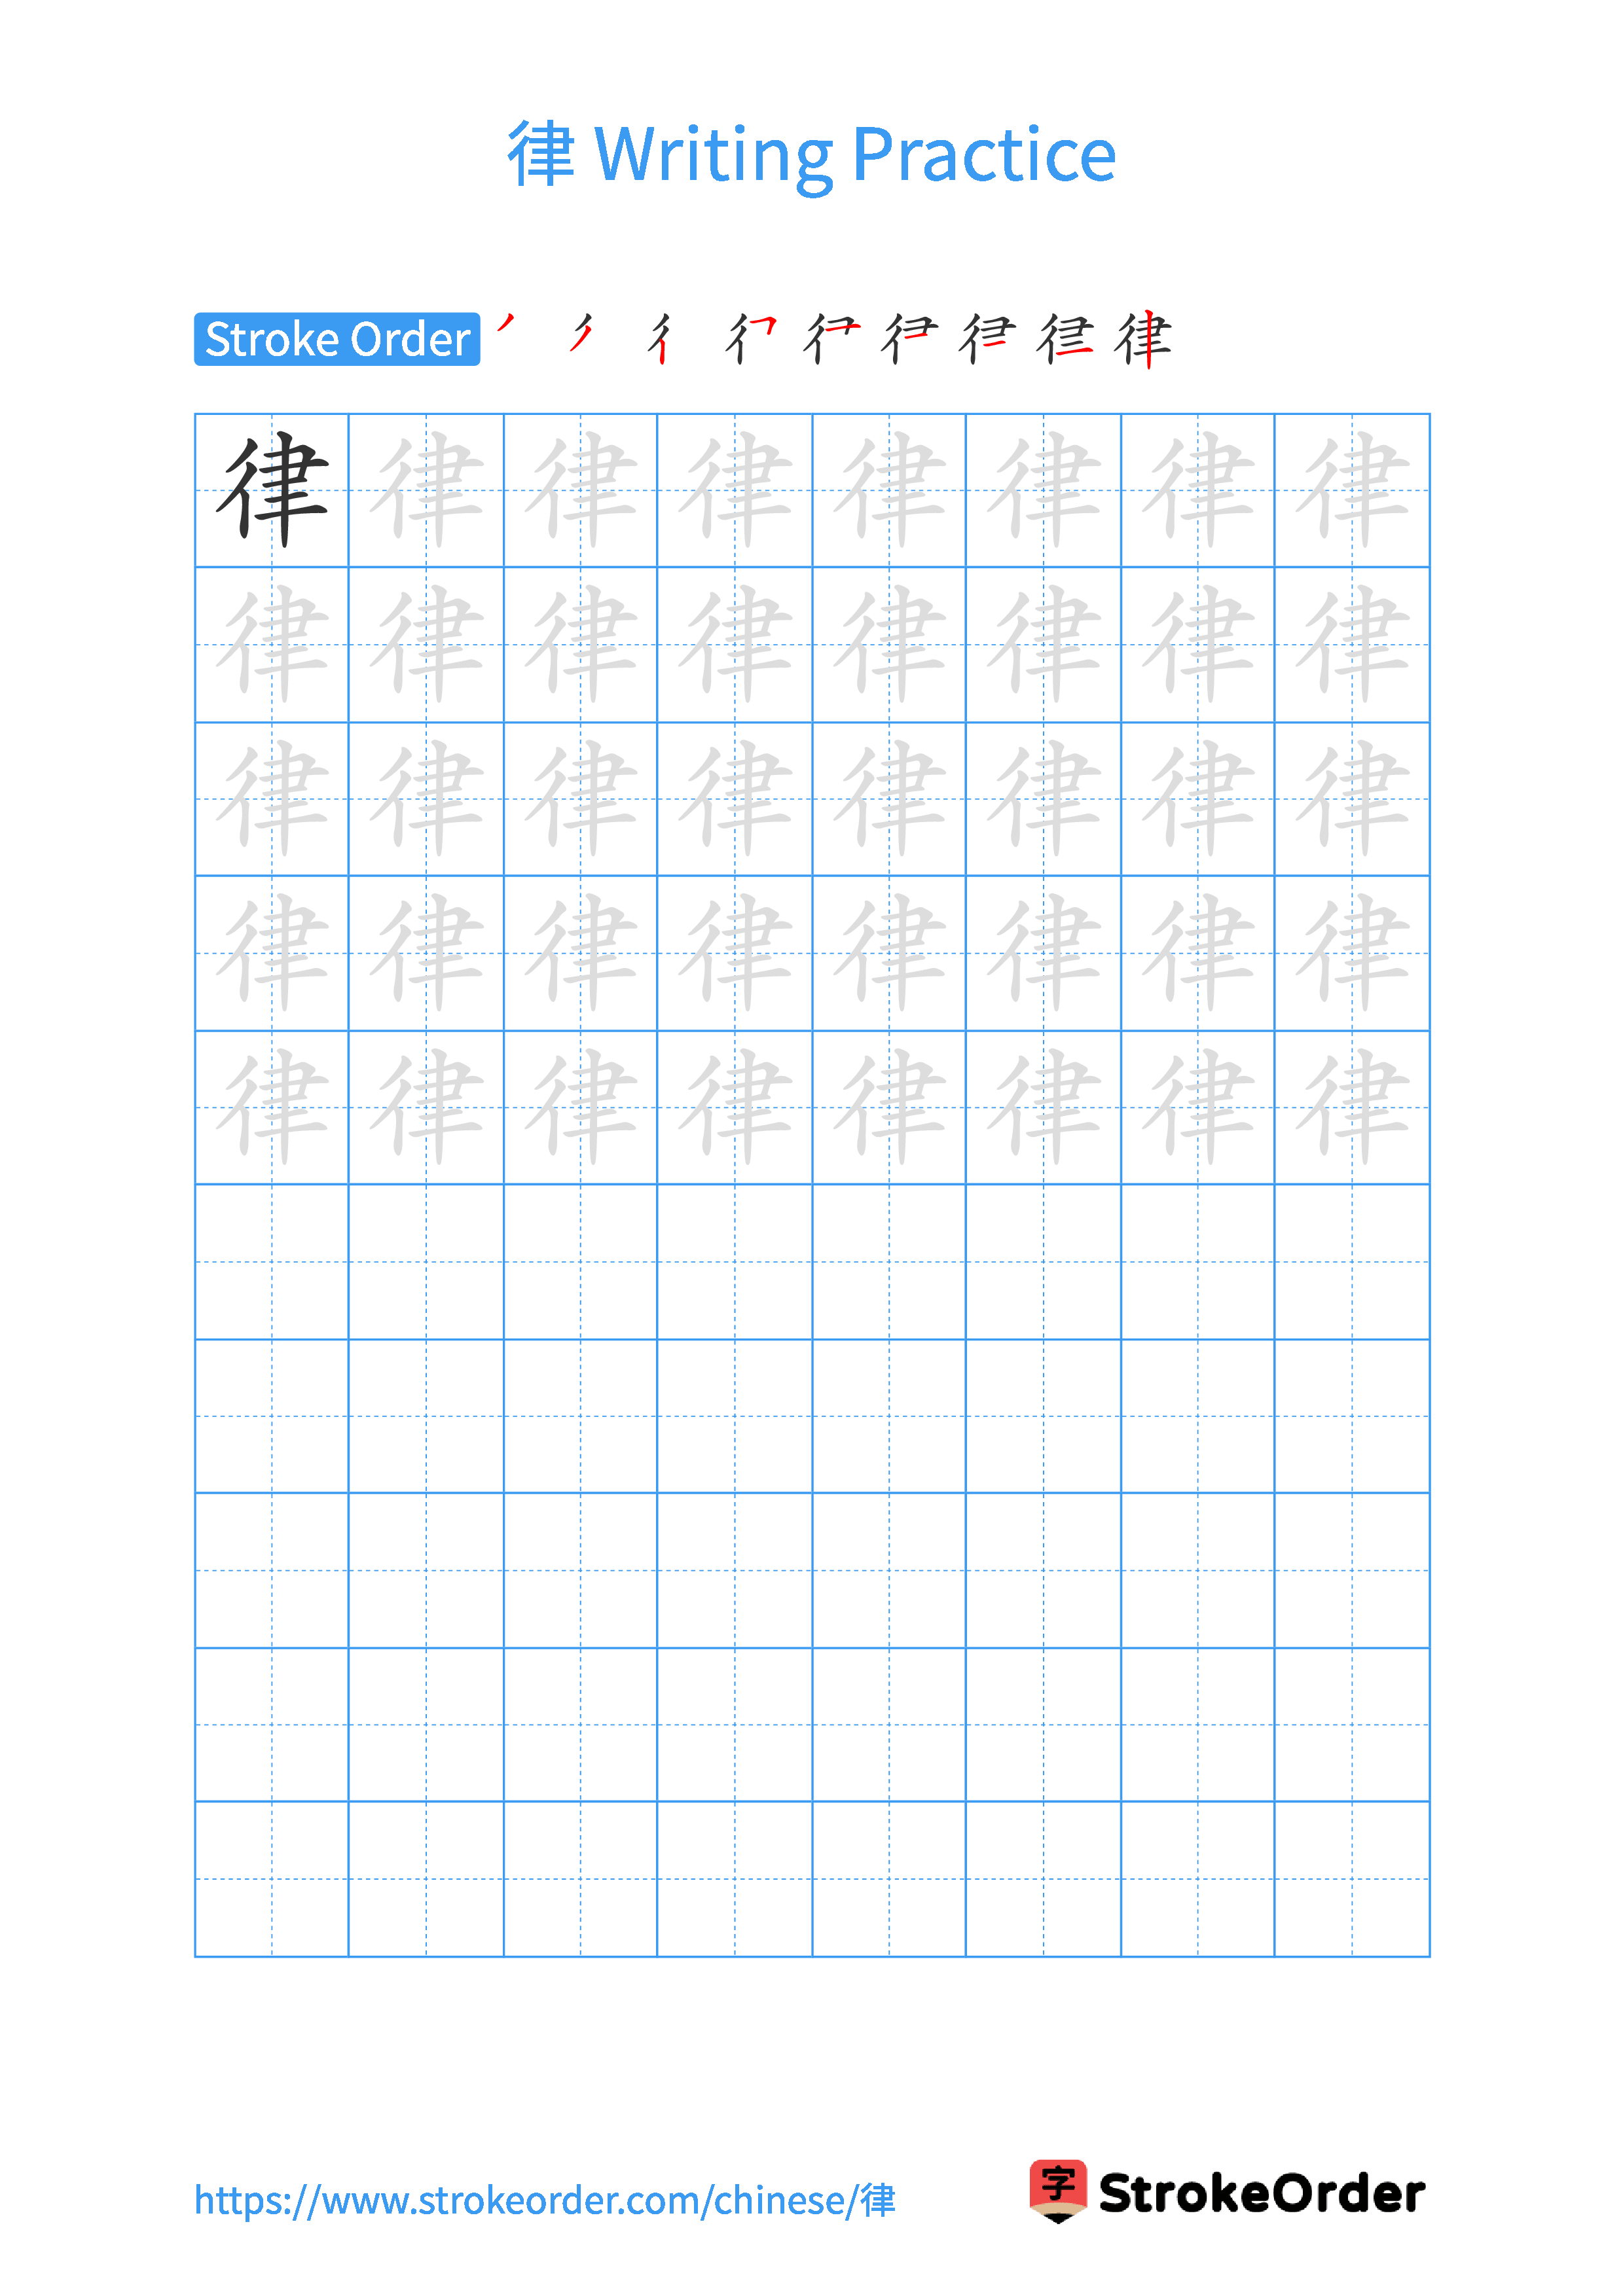 Printable Handwriting Practice Worksheet of the Chinese character 律 in Portrait Orientation (Tian Zi Ge)